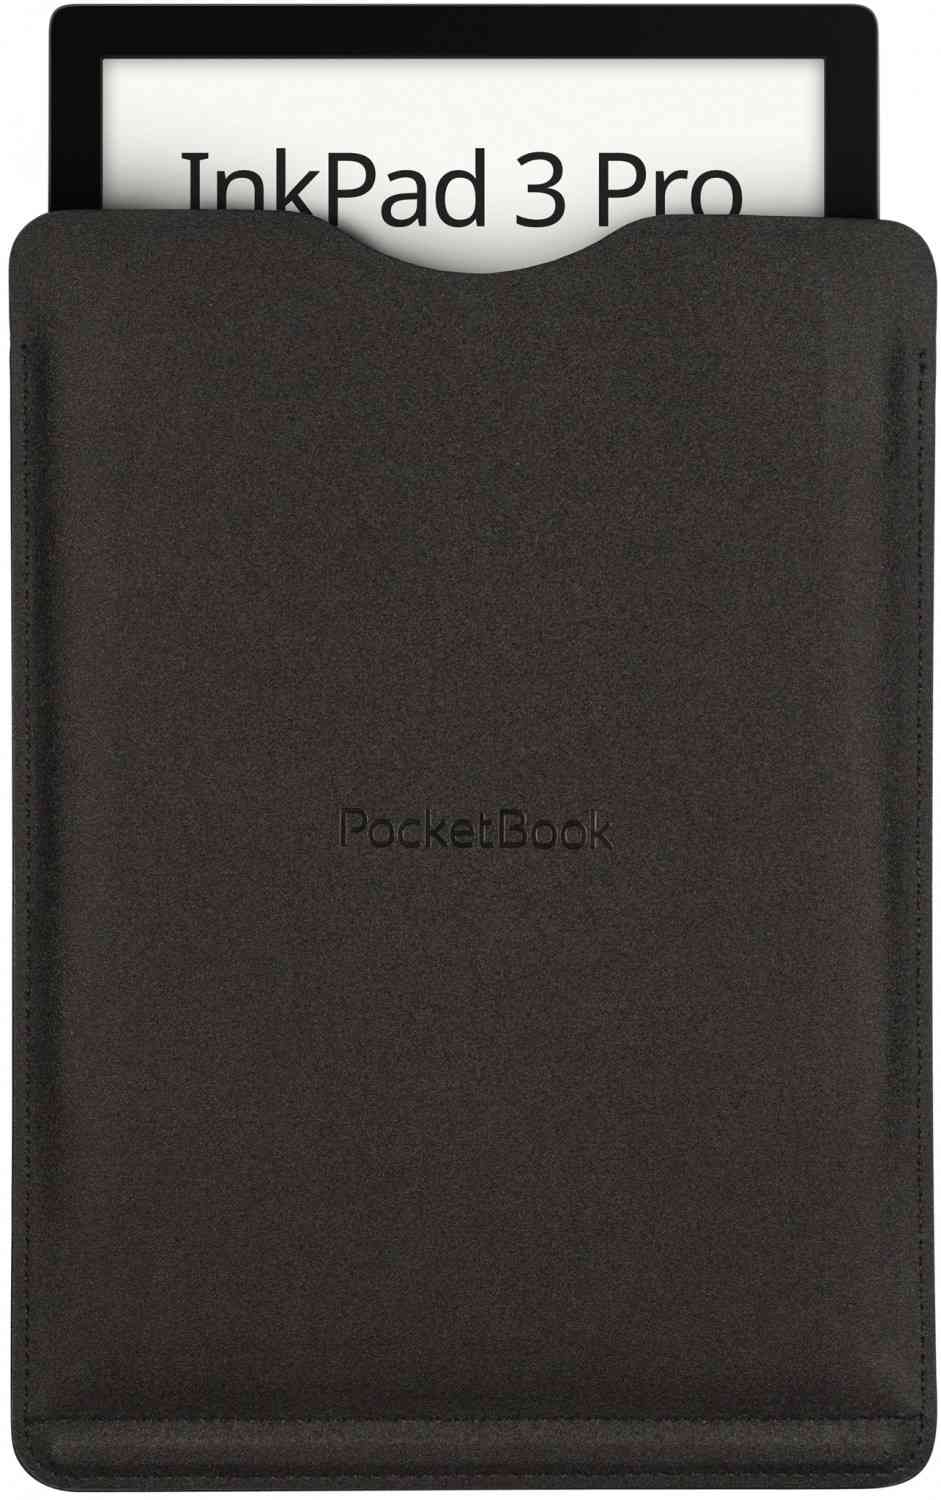 E-Book Reader Pocketbook InkPad 3 Pro im Test, Bild 4